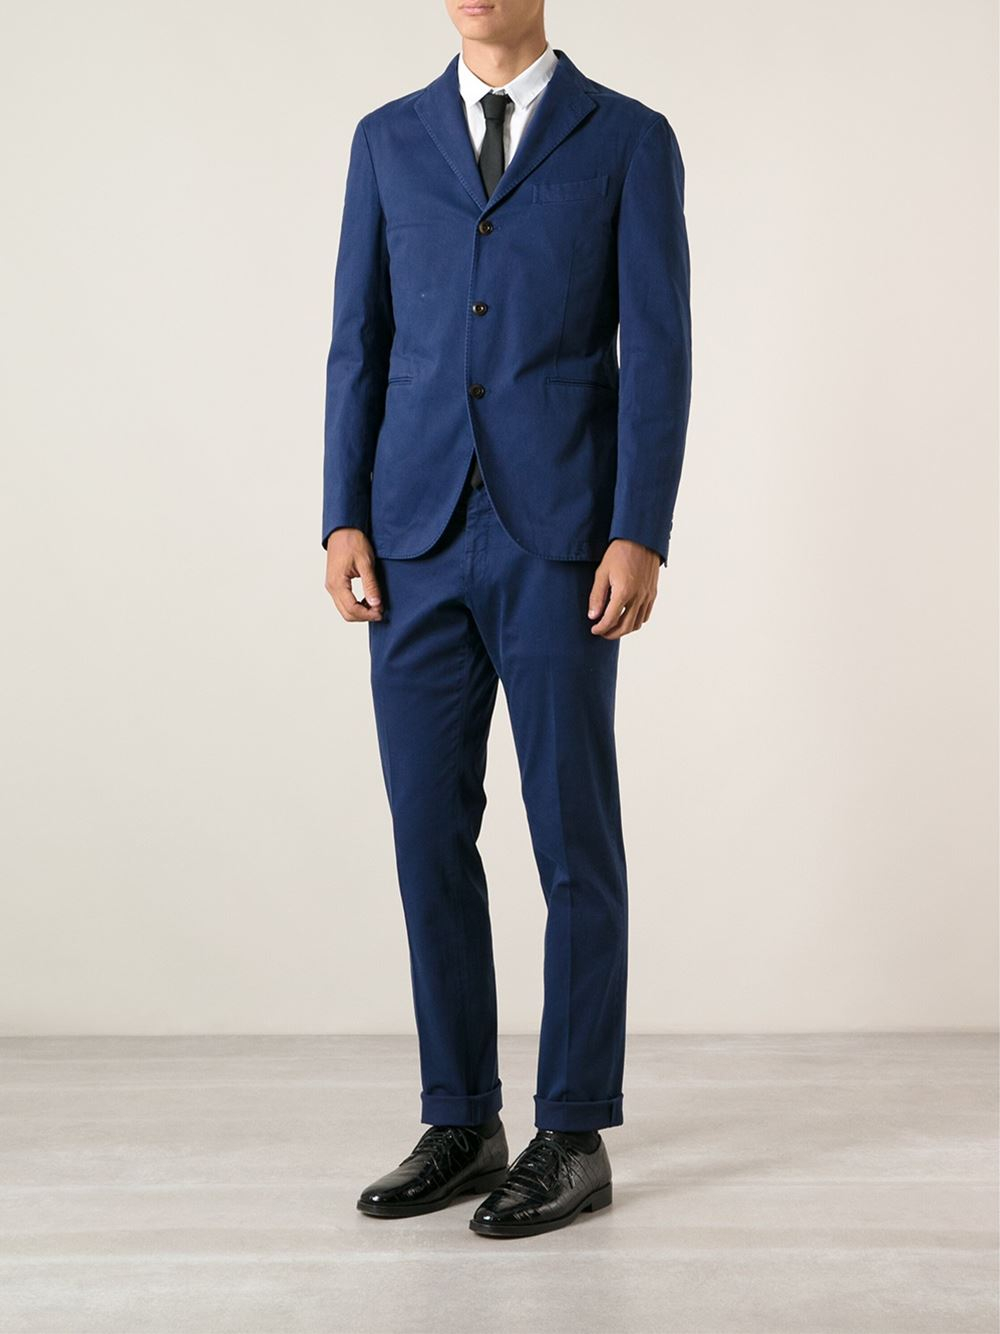 Lyst - Boglioli Deconstructed Suit in Blue for Men